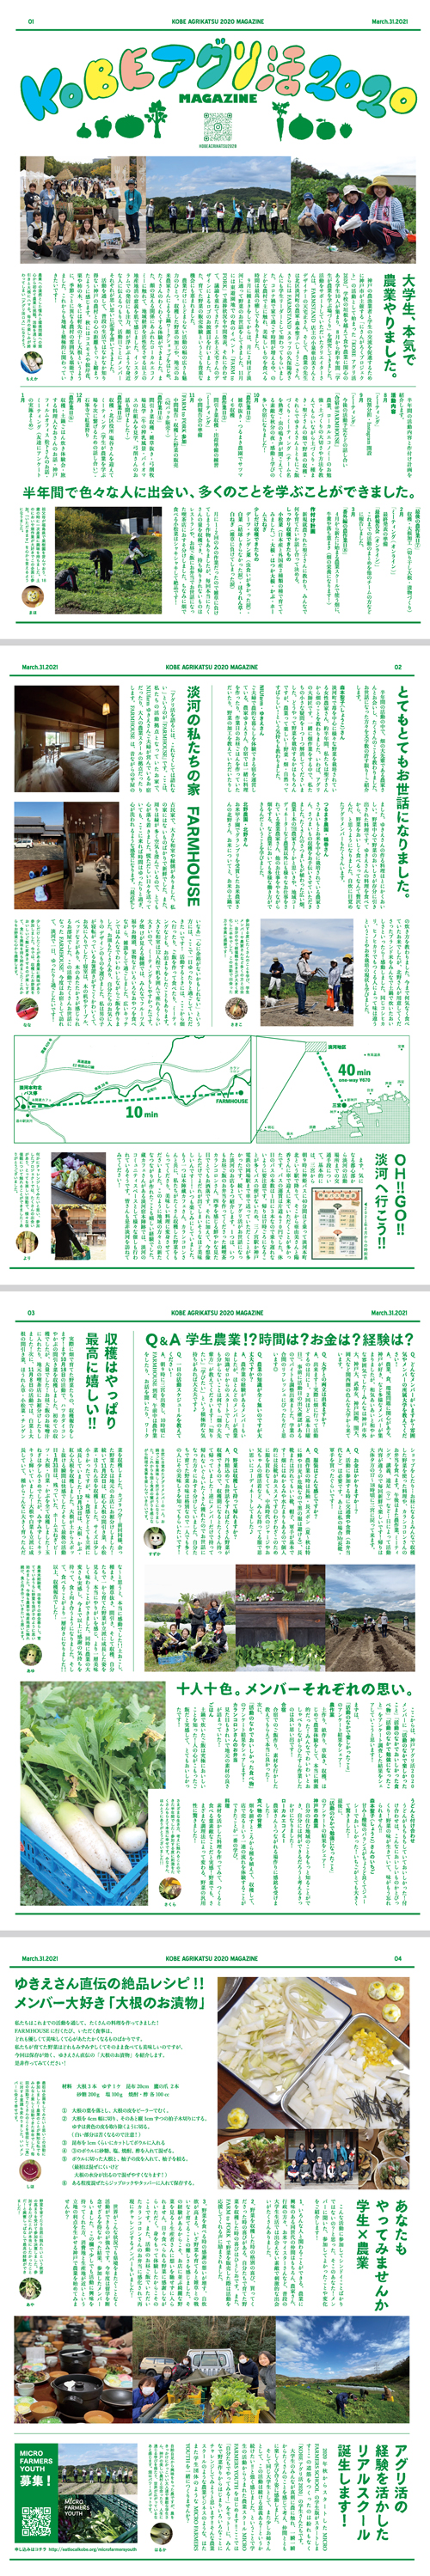 KOBE agrikatsu 2020 Magazine